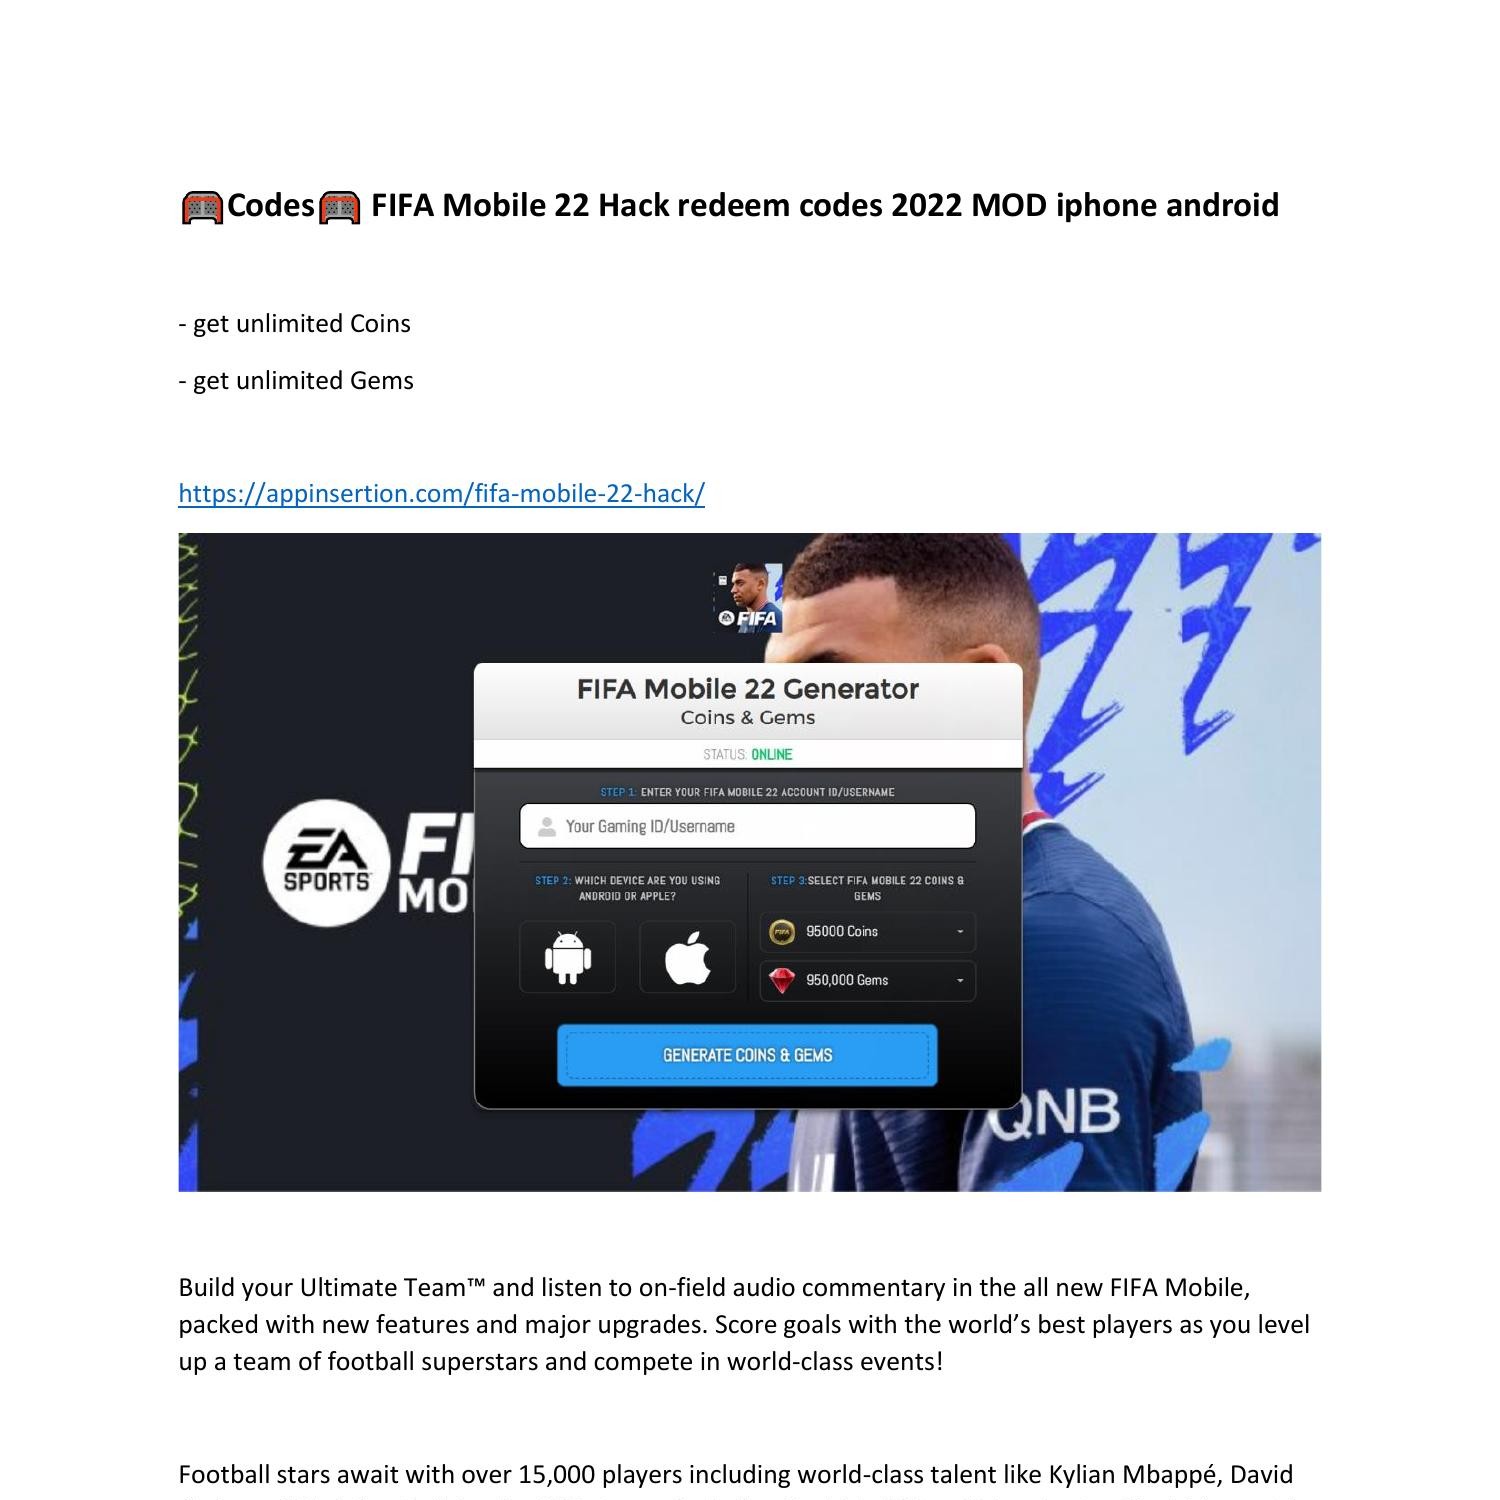 FIFA 22 Mobile Hack Mod Apk Android iOS Codes.pdf